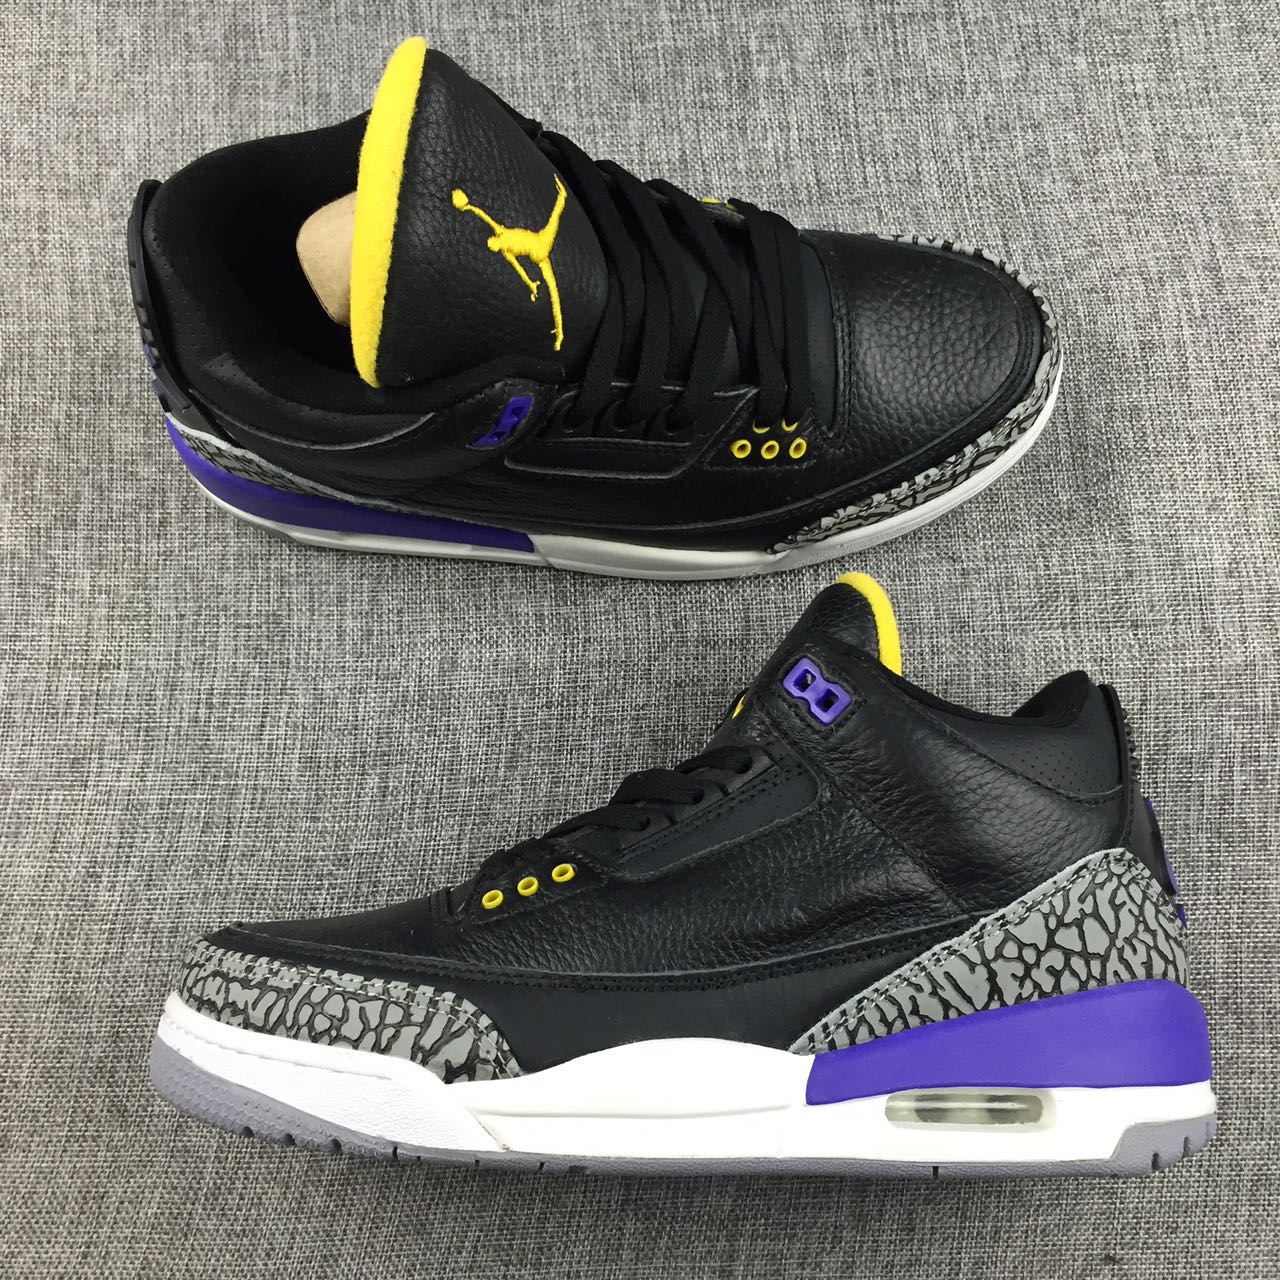 New Air Jordan 3 Black Purple Yellow Shoes